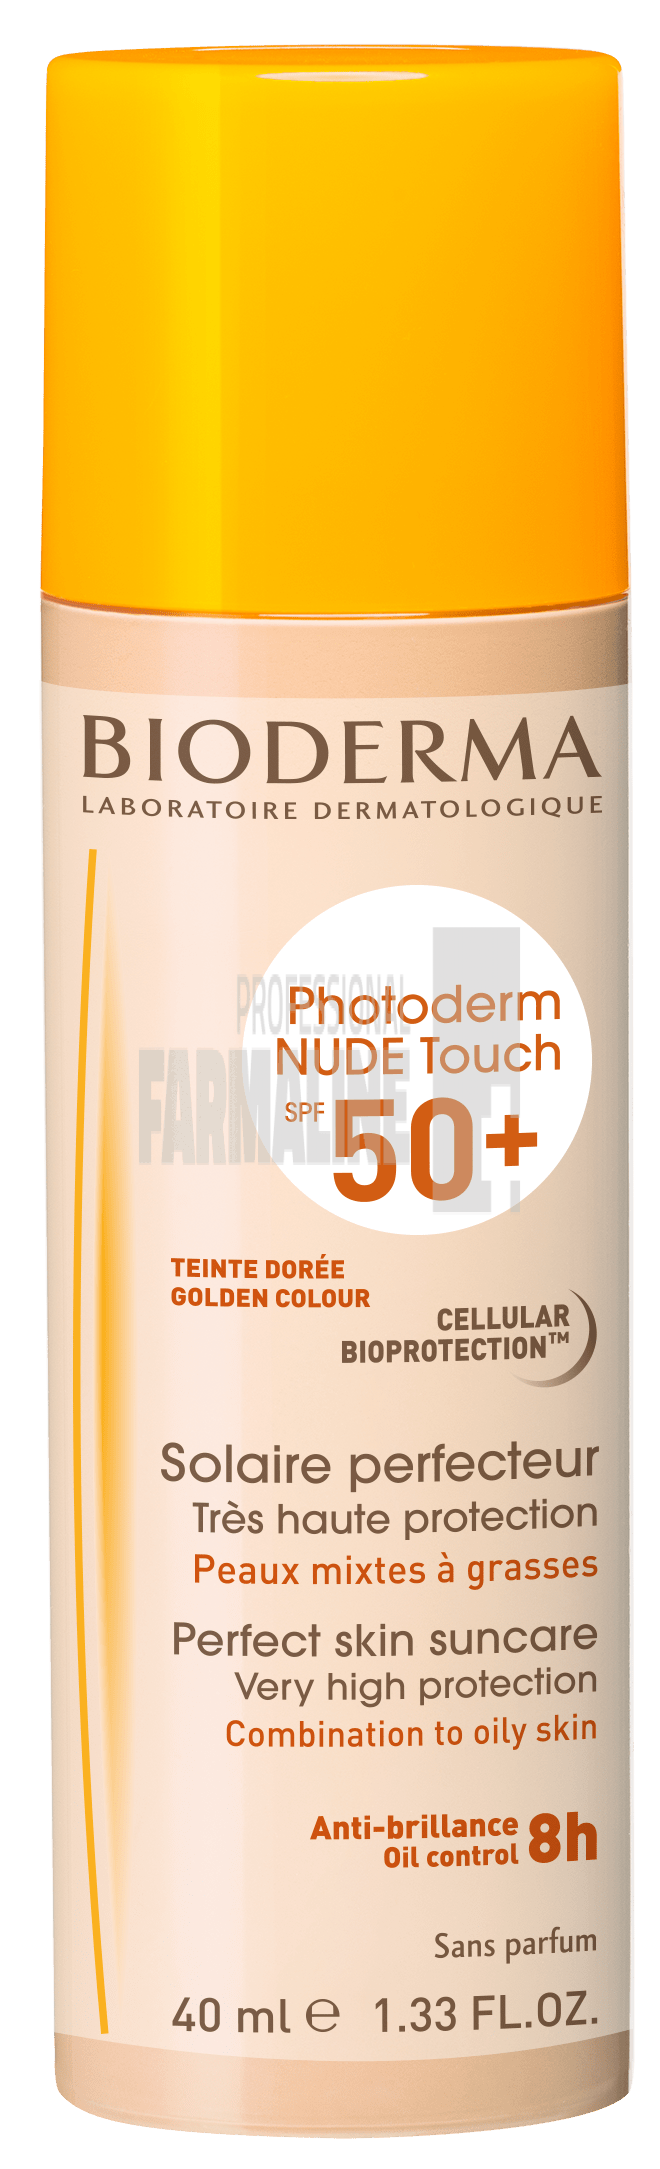 Bioderma Photoderm Nude Touch SPF50 Doree 40 ml